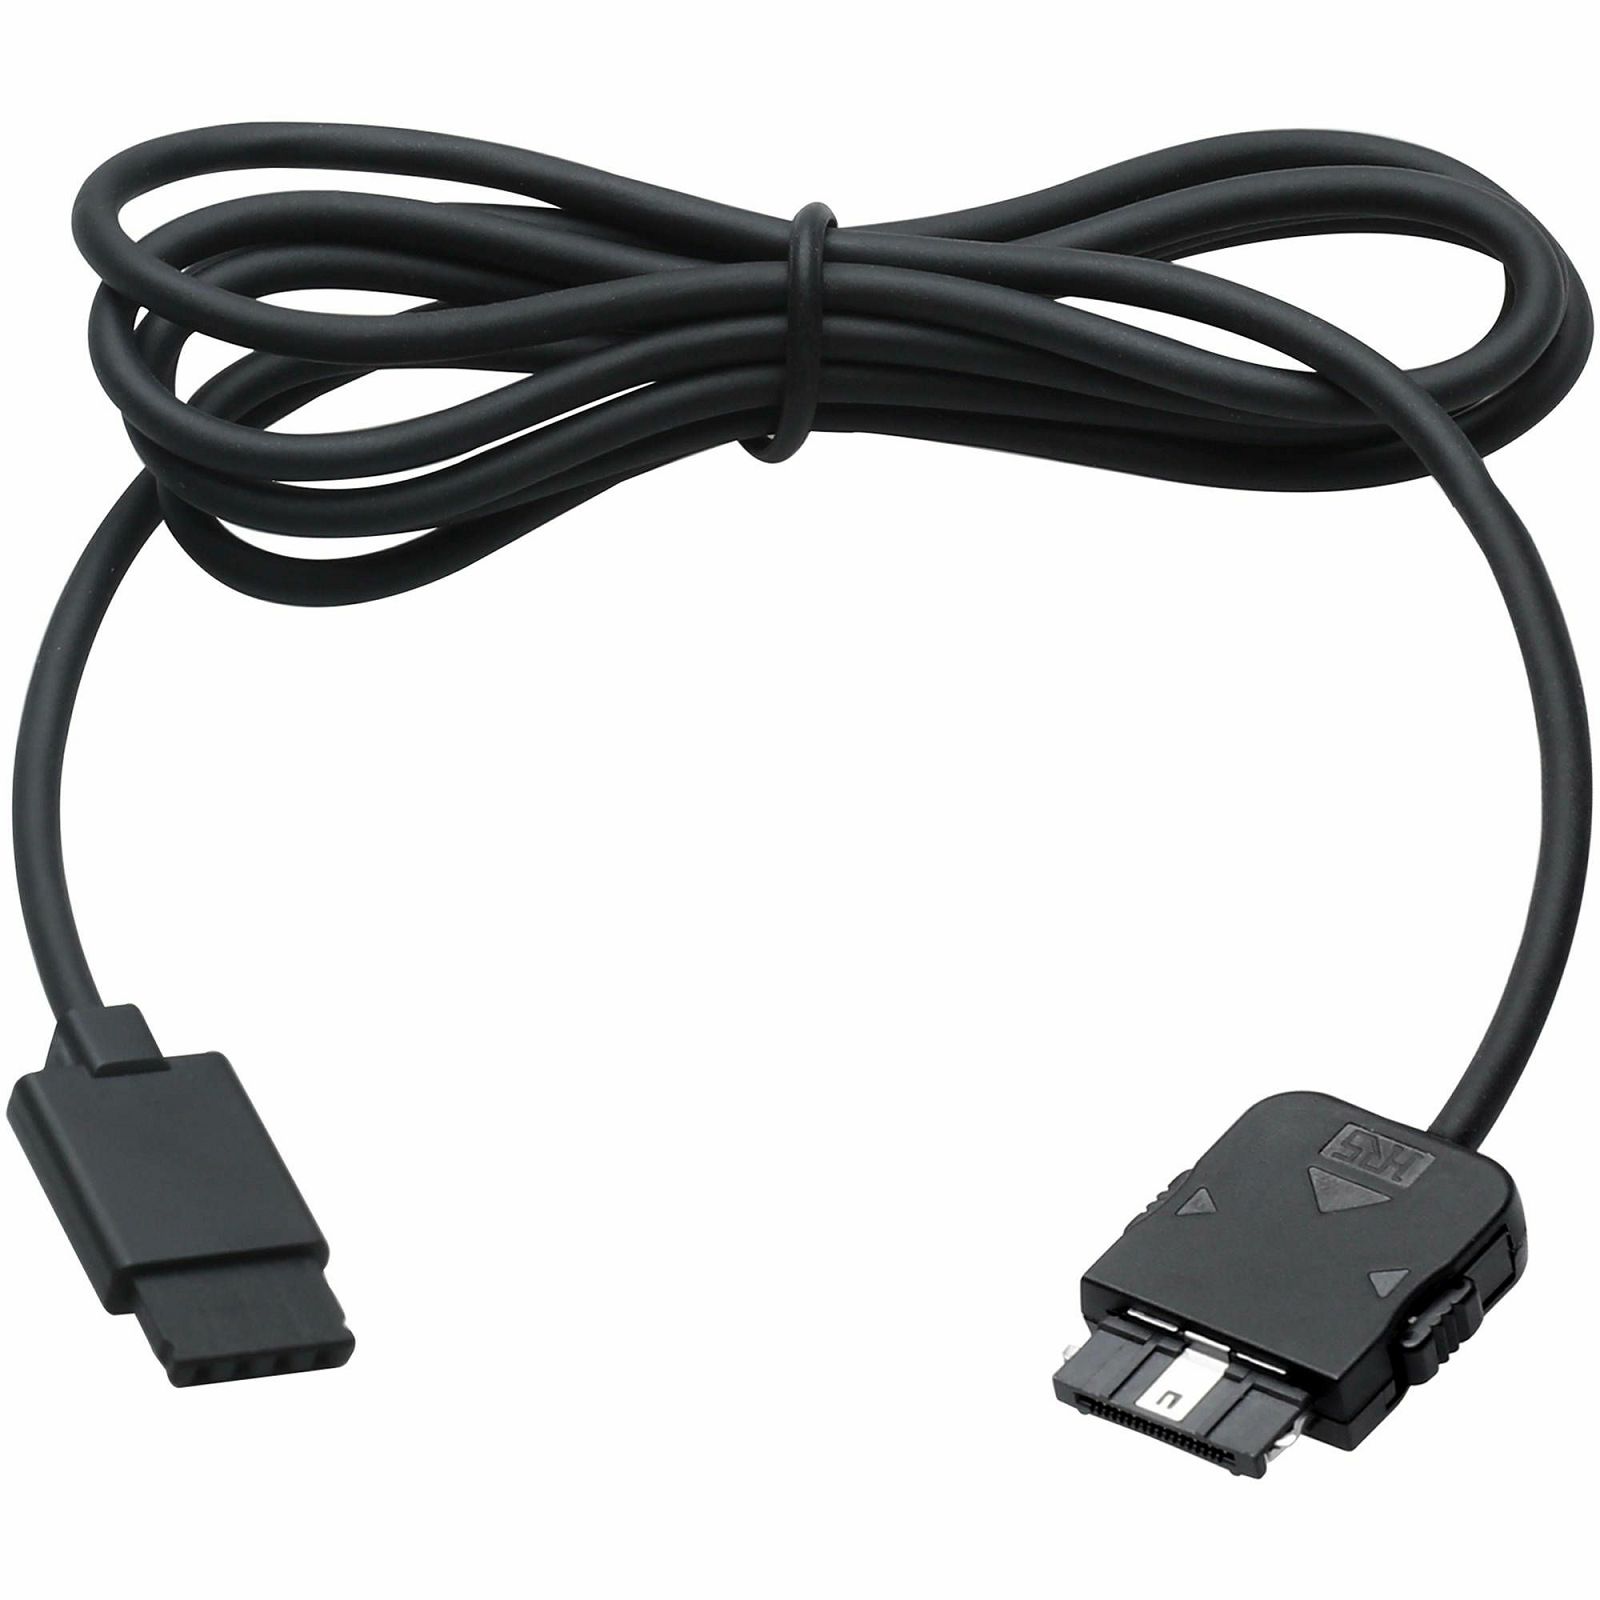 DJI Focus Spare Part 31 Focus Handwheel-Inspire 2 Remote Controller CAN Bus Cable (1.2M)